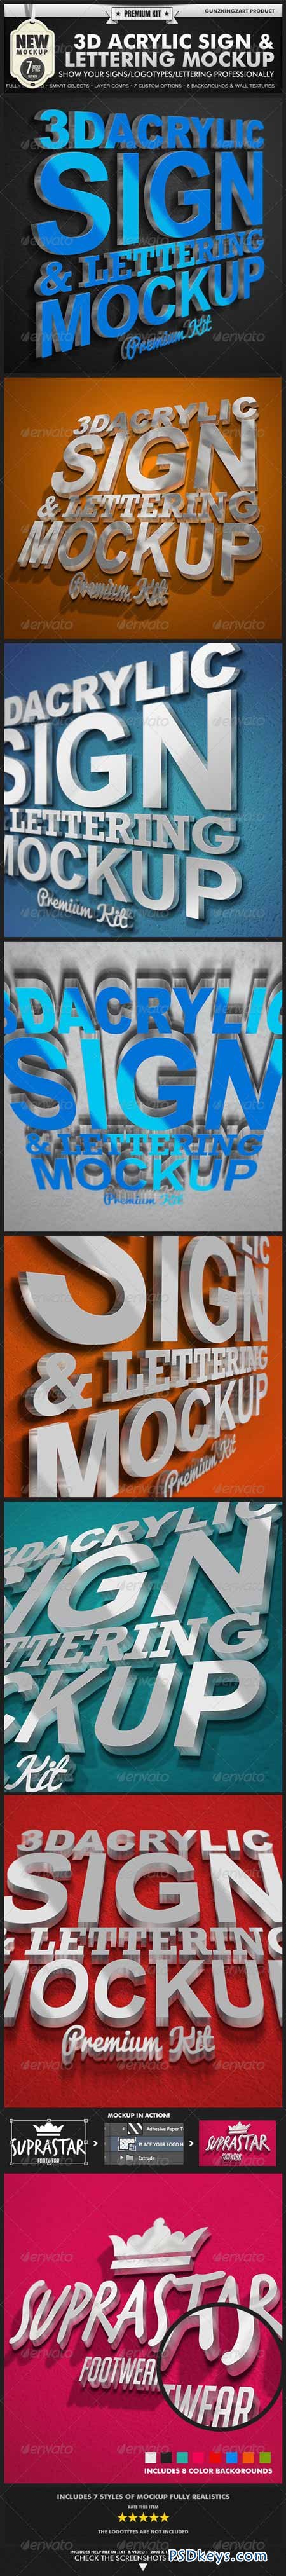 3D Acrylic Sign Mockup - Premium Kit 2582248